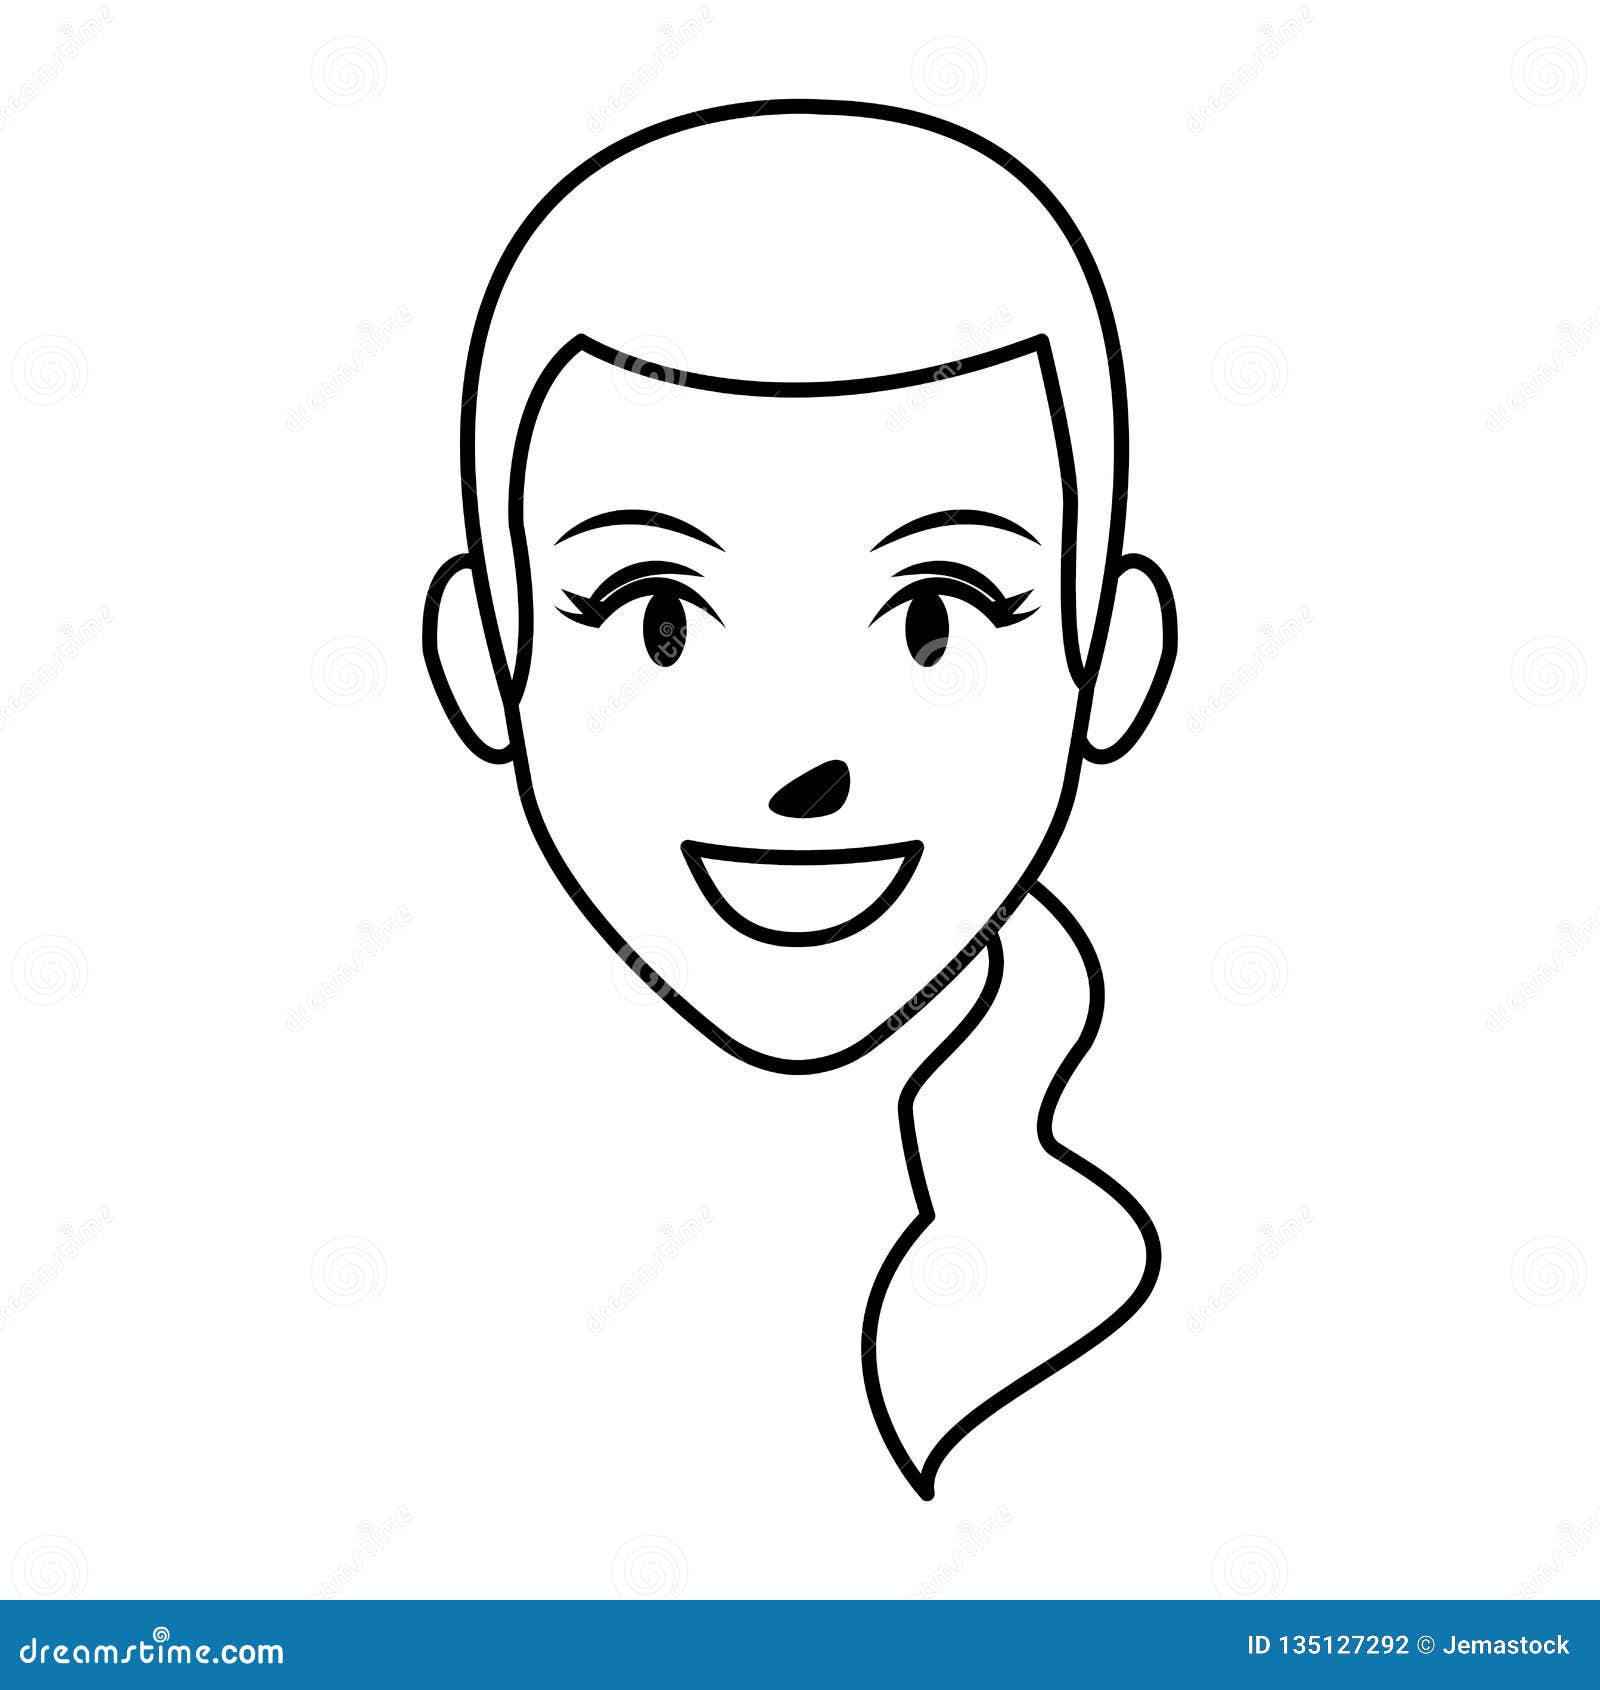 Cute woman face cartoon stock vector. Illustration of head - 135127292